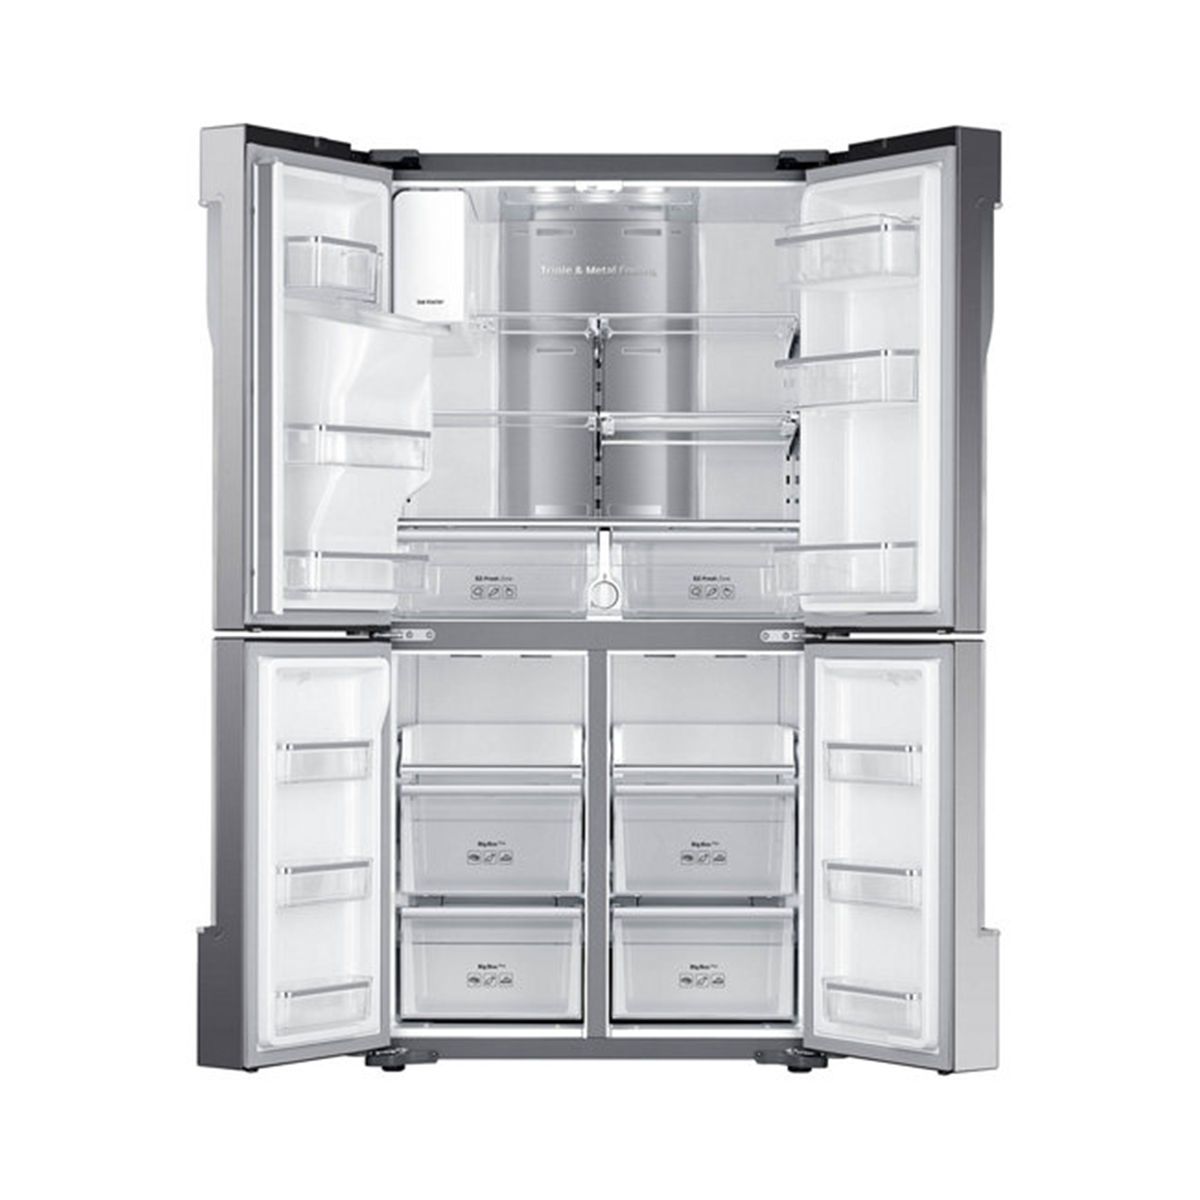 Samsung Side By Side Refrigerator RF56N9040S 628Ltr